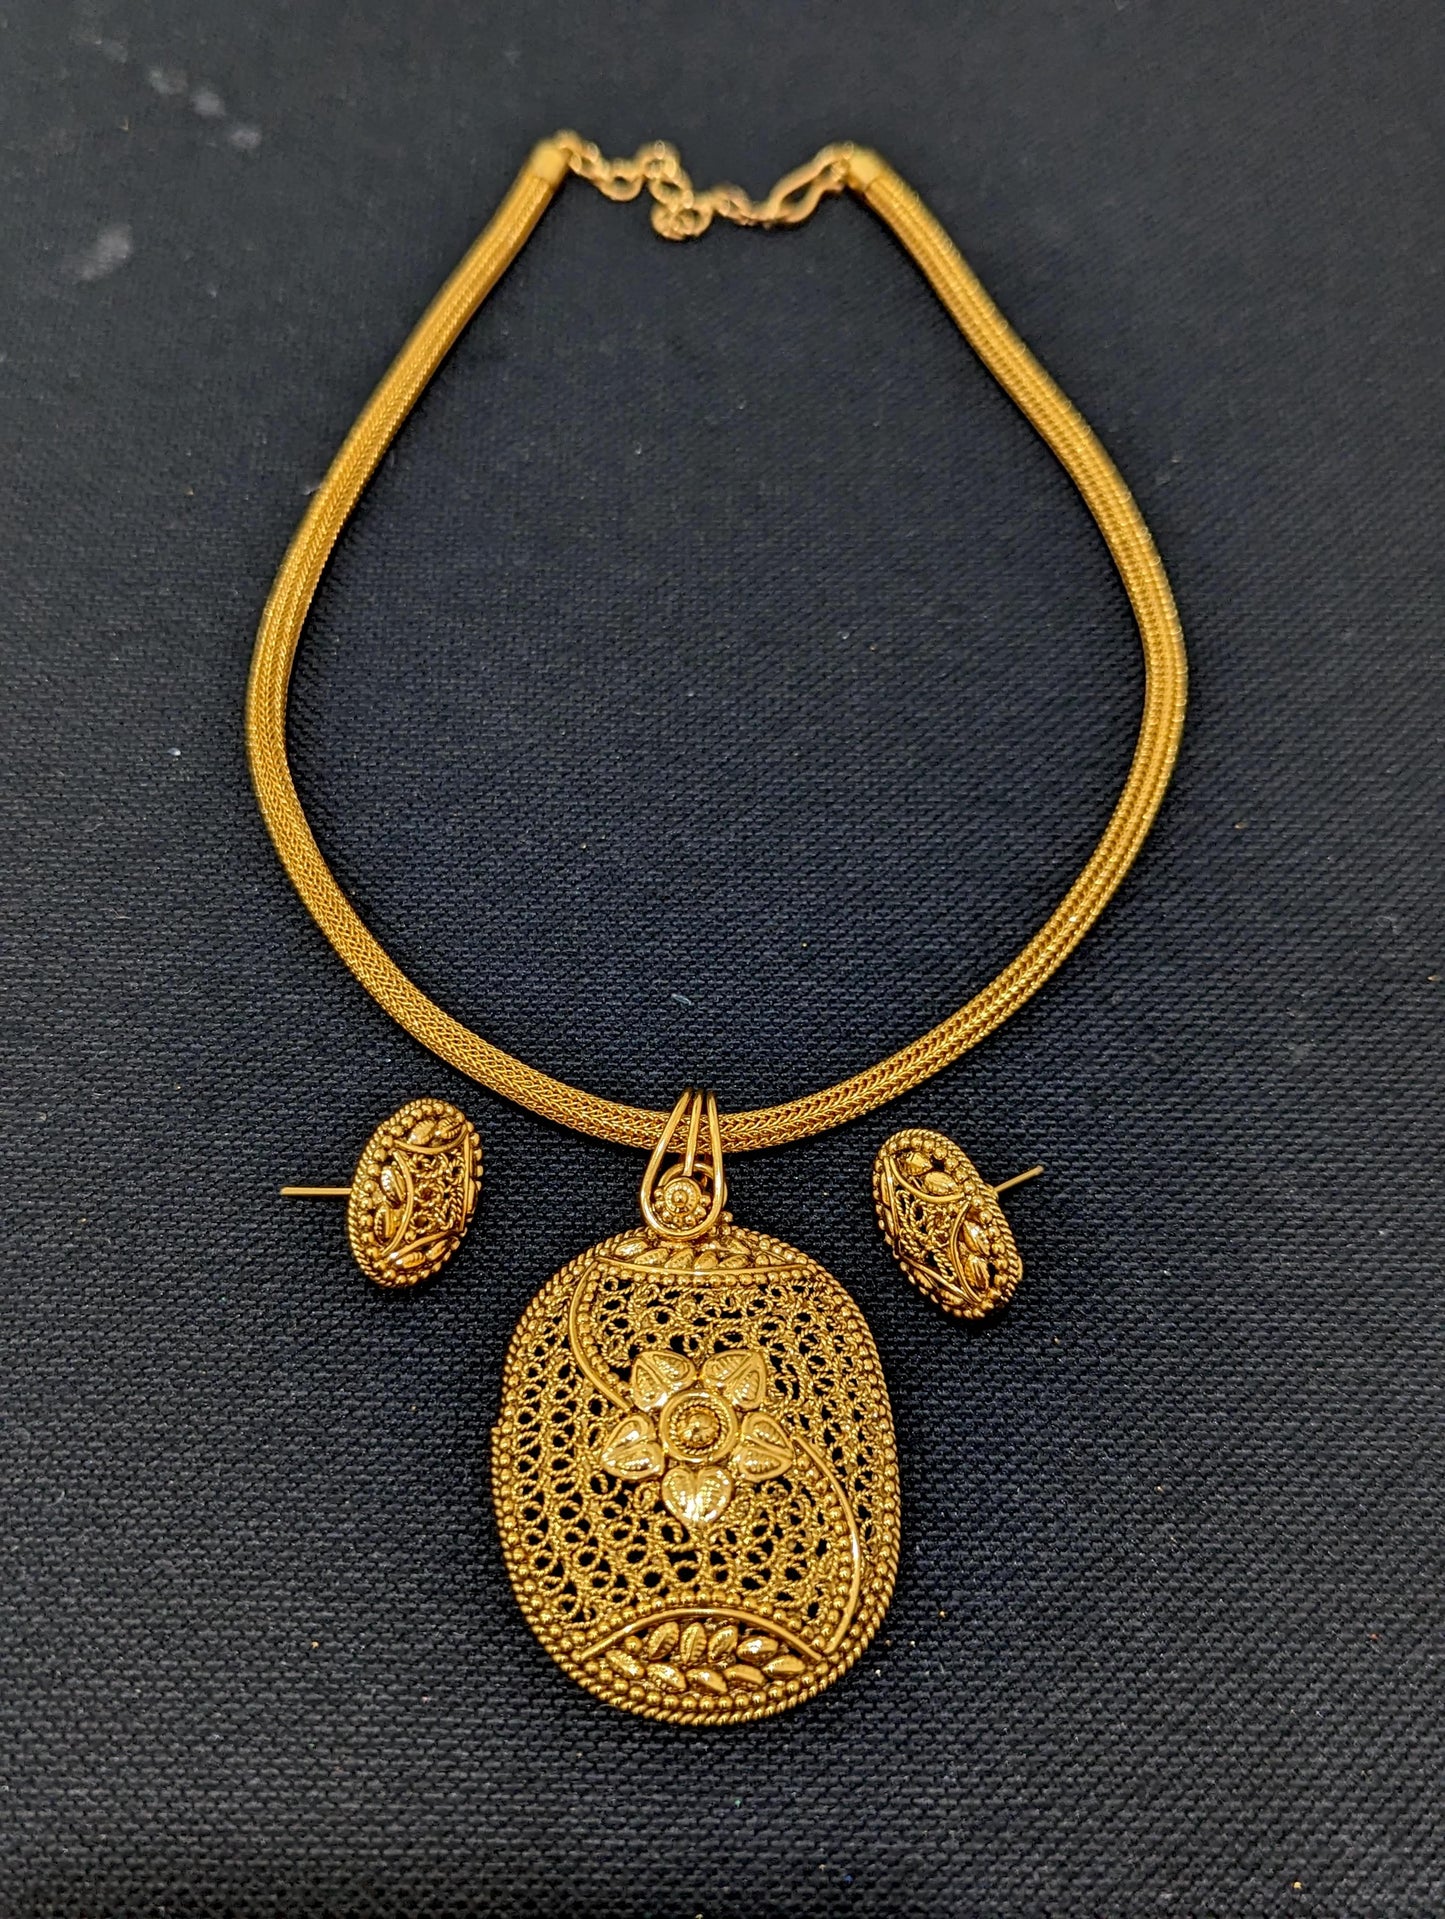 Gold look alike Pendant and Earrings Set - Design 2